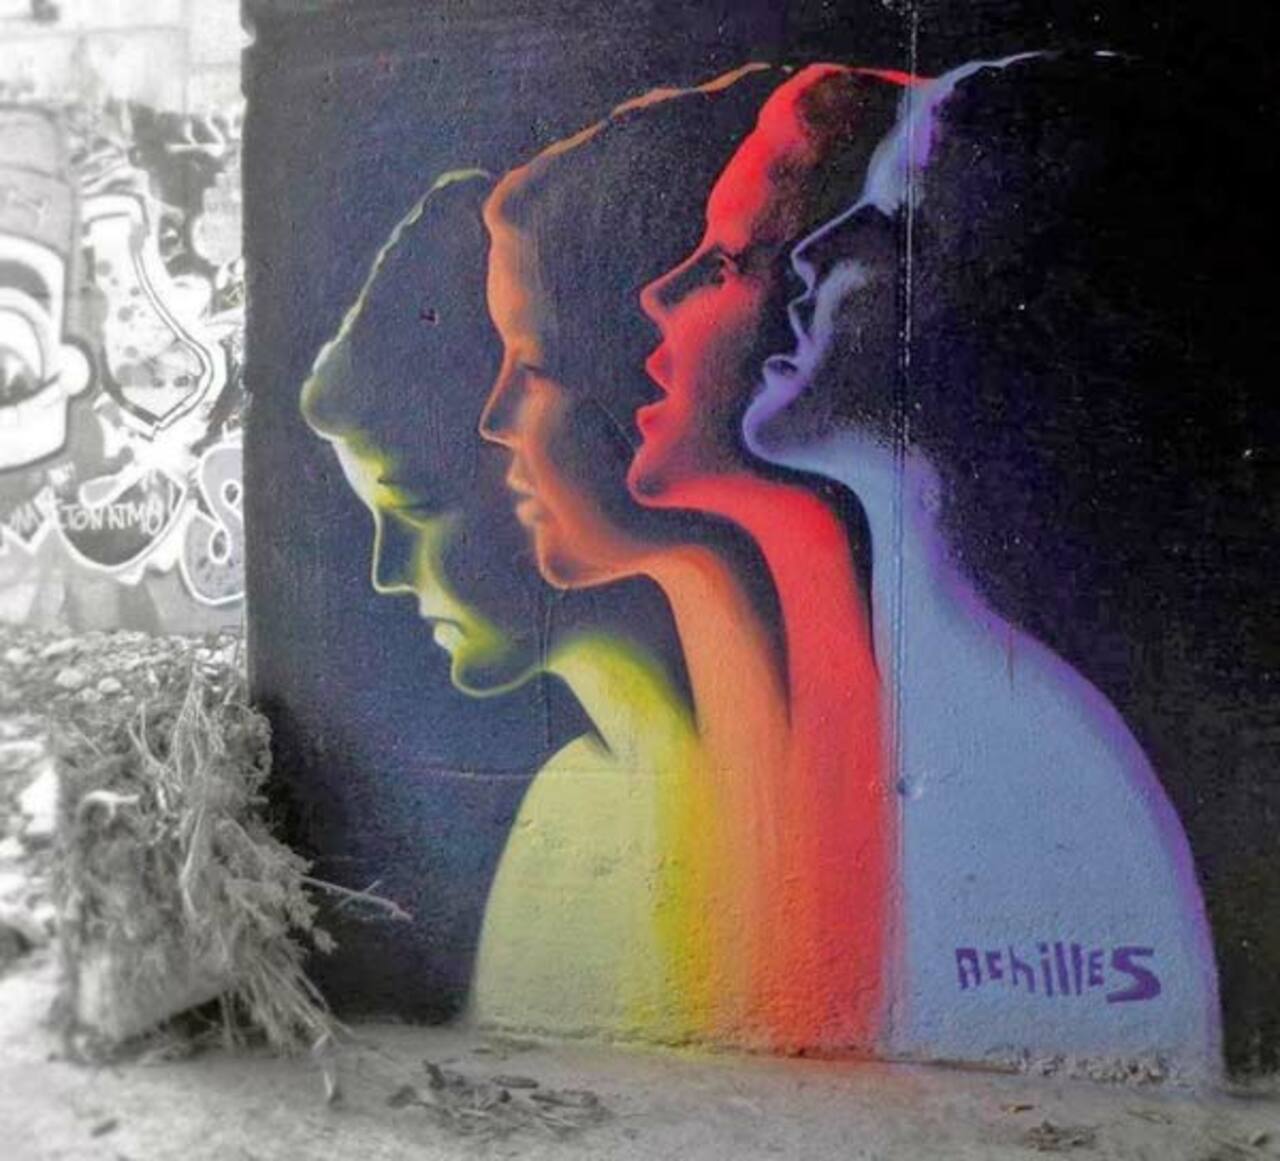 "@BenWest: RT @arttrade: @ElsaHadade: RT @hypatia373: #art #streetart #graffiti #Achilles http://t.co/iBLjg2WsJ1 http://wp.me/p4GZvF-1UyE"